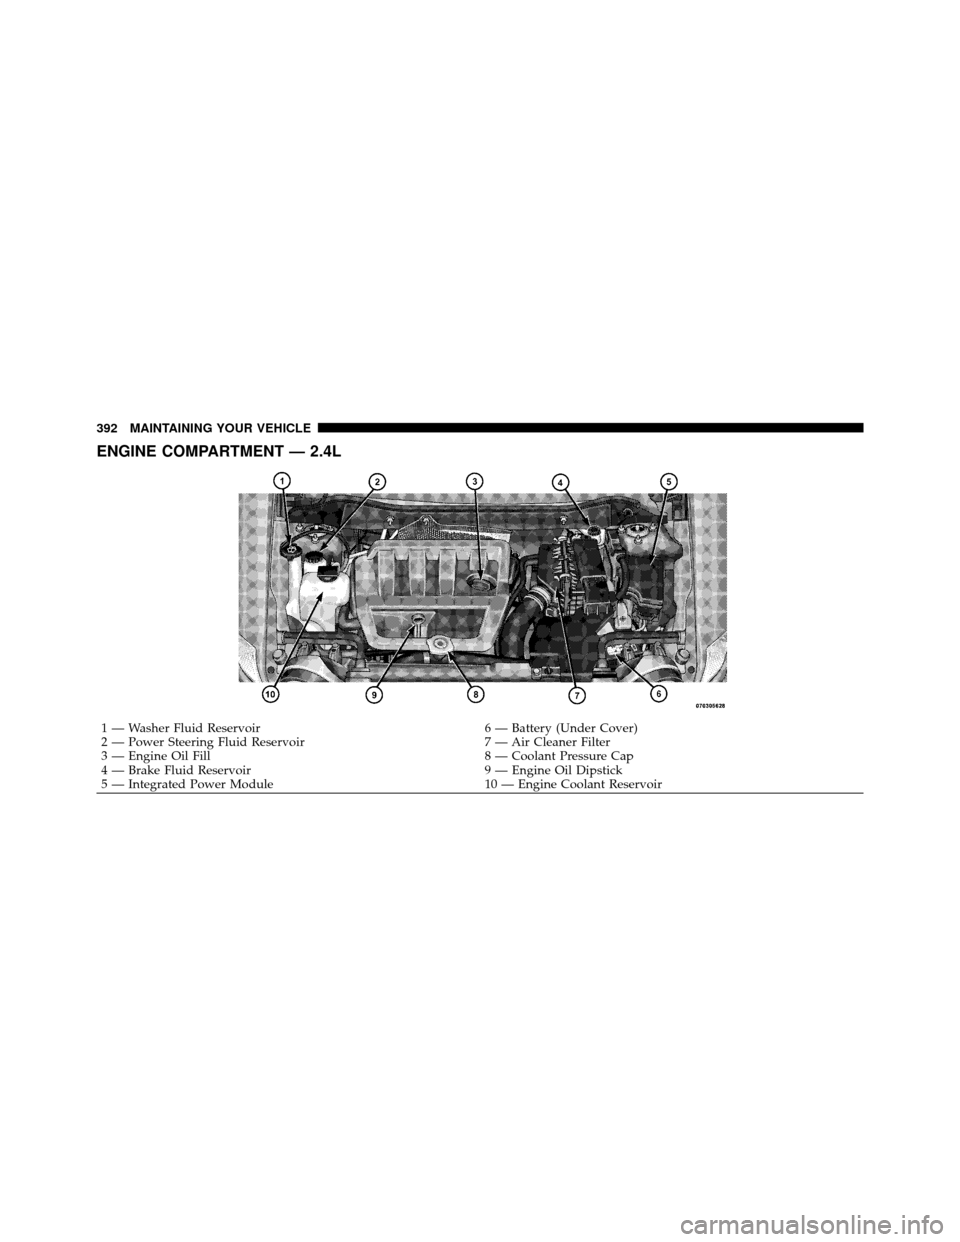 DODGE CALIBER 2010 1.G User Guide ENGINE COMPARTMENT — 2.4L
1 — Washer Fluid Reservoir6 — Battery (Under Cover)
2 — Power Steering Fluid Reservoir 7 — Air Cleaner Filter
3 — Engine Oil Fill 8 — Coolant Pressure Cap
4 —